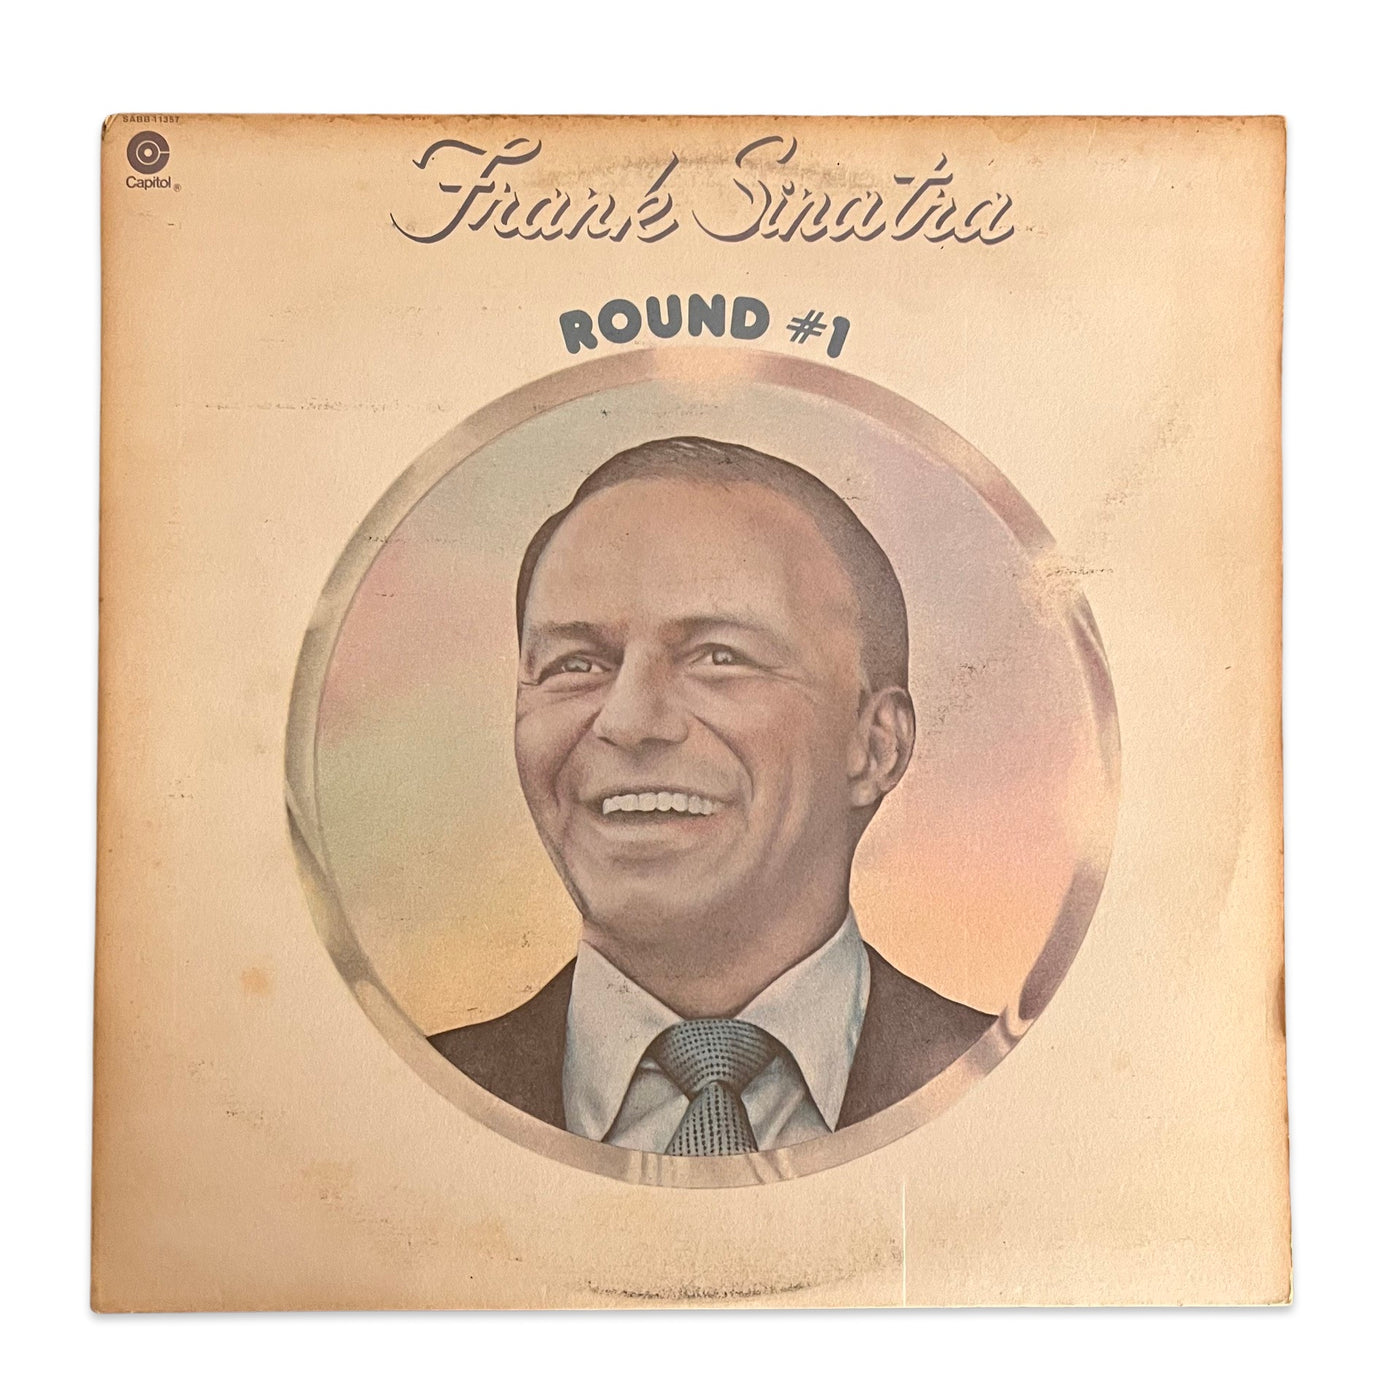 Frank Sinatra – Round #1